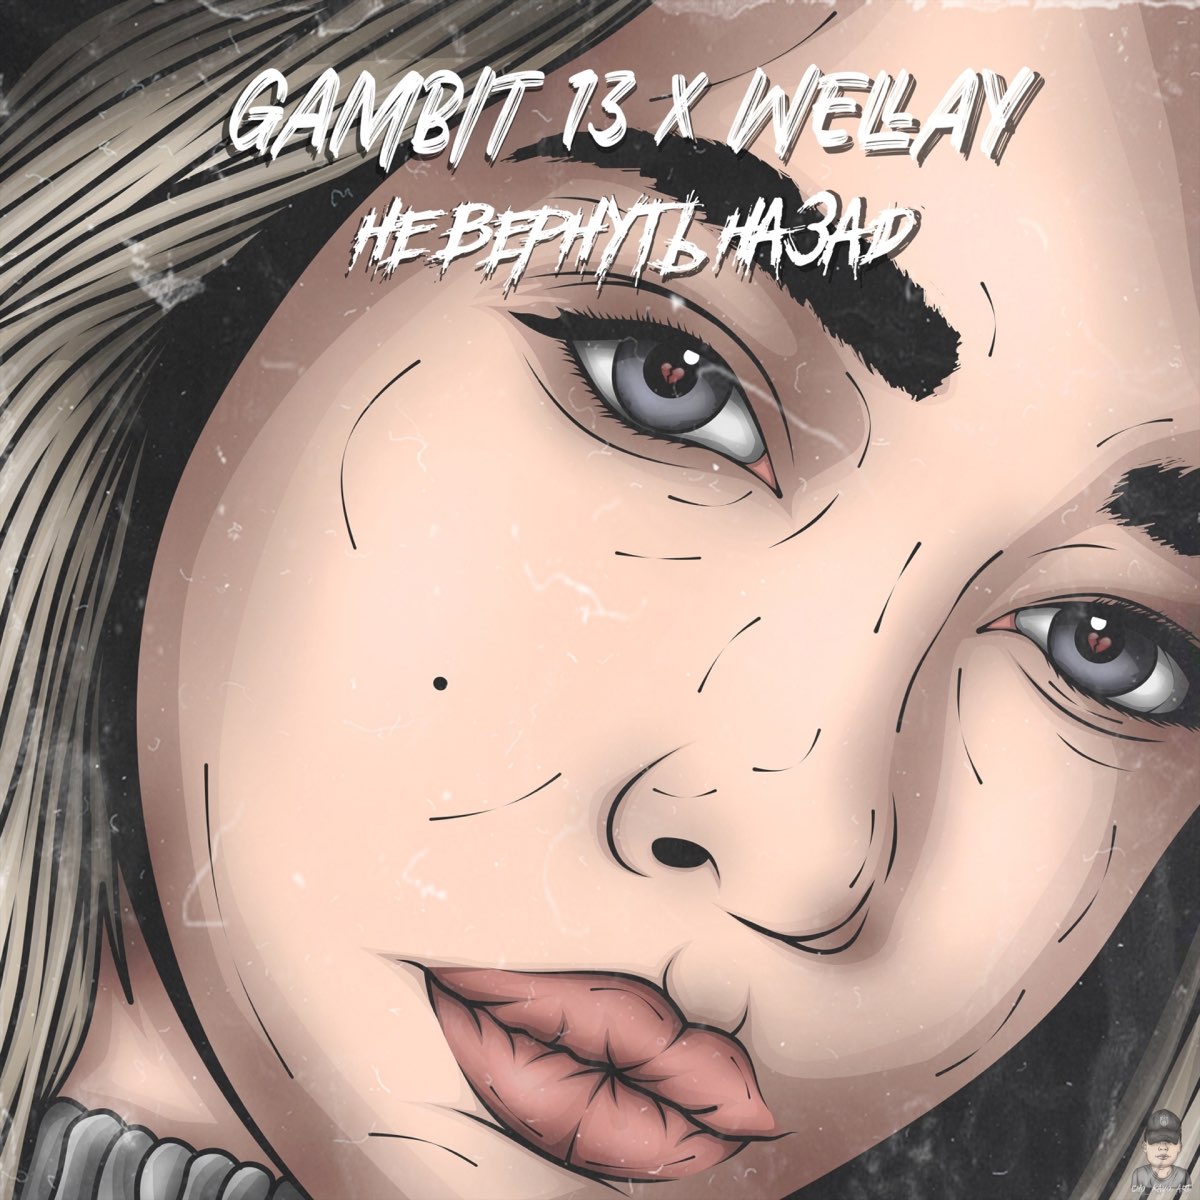 Гамбит музыка. Gambit 13. Не вернуть назад Gambit. Не вернуть назад Gambit 13. Cold Carti обложки песен.